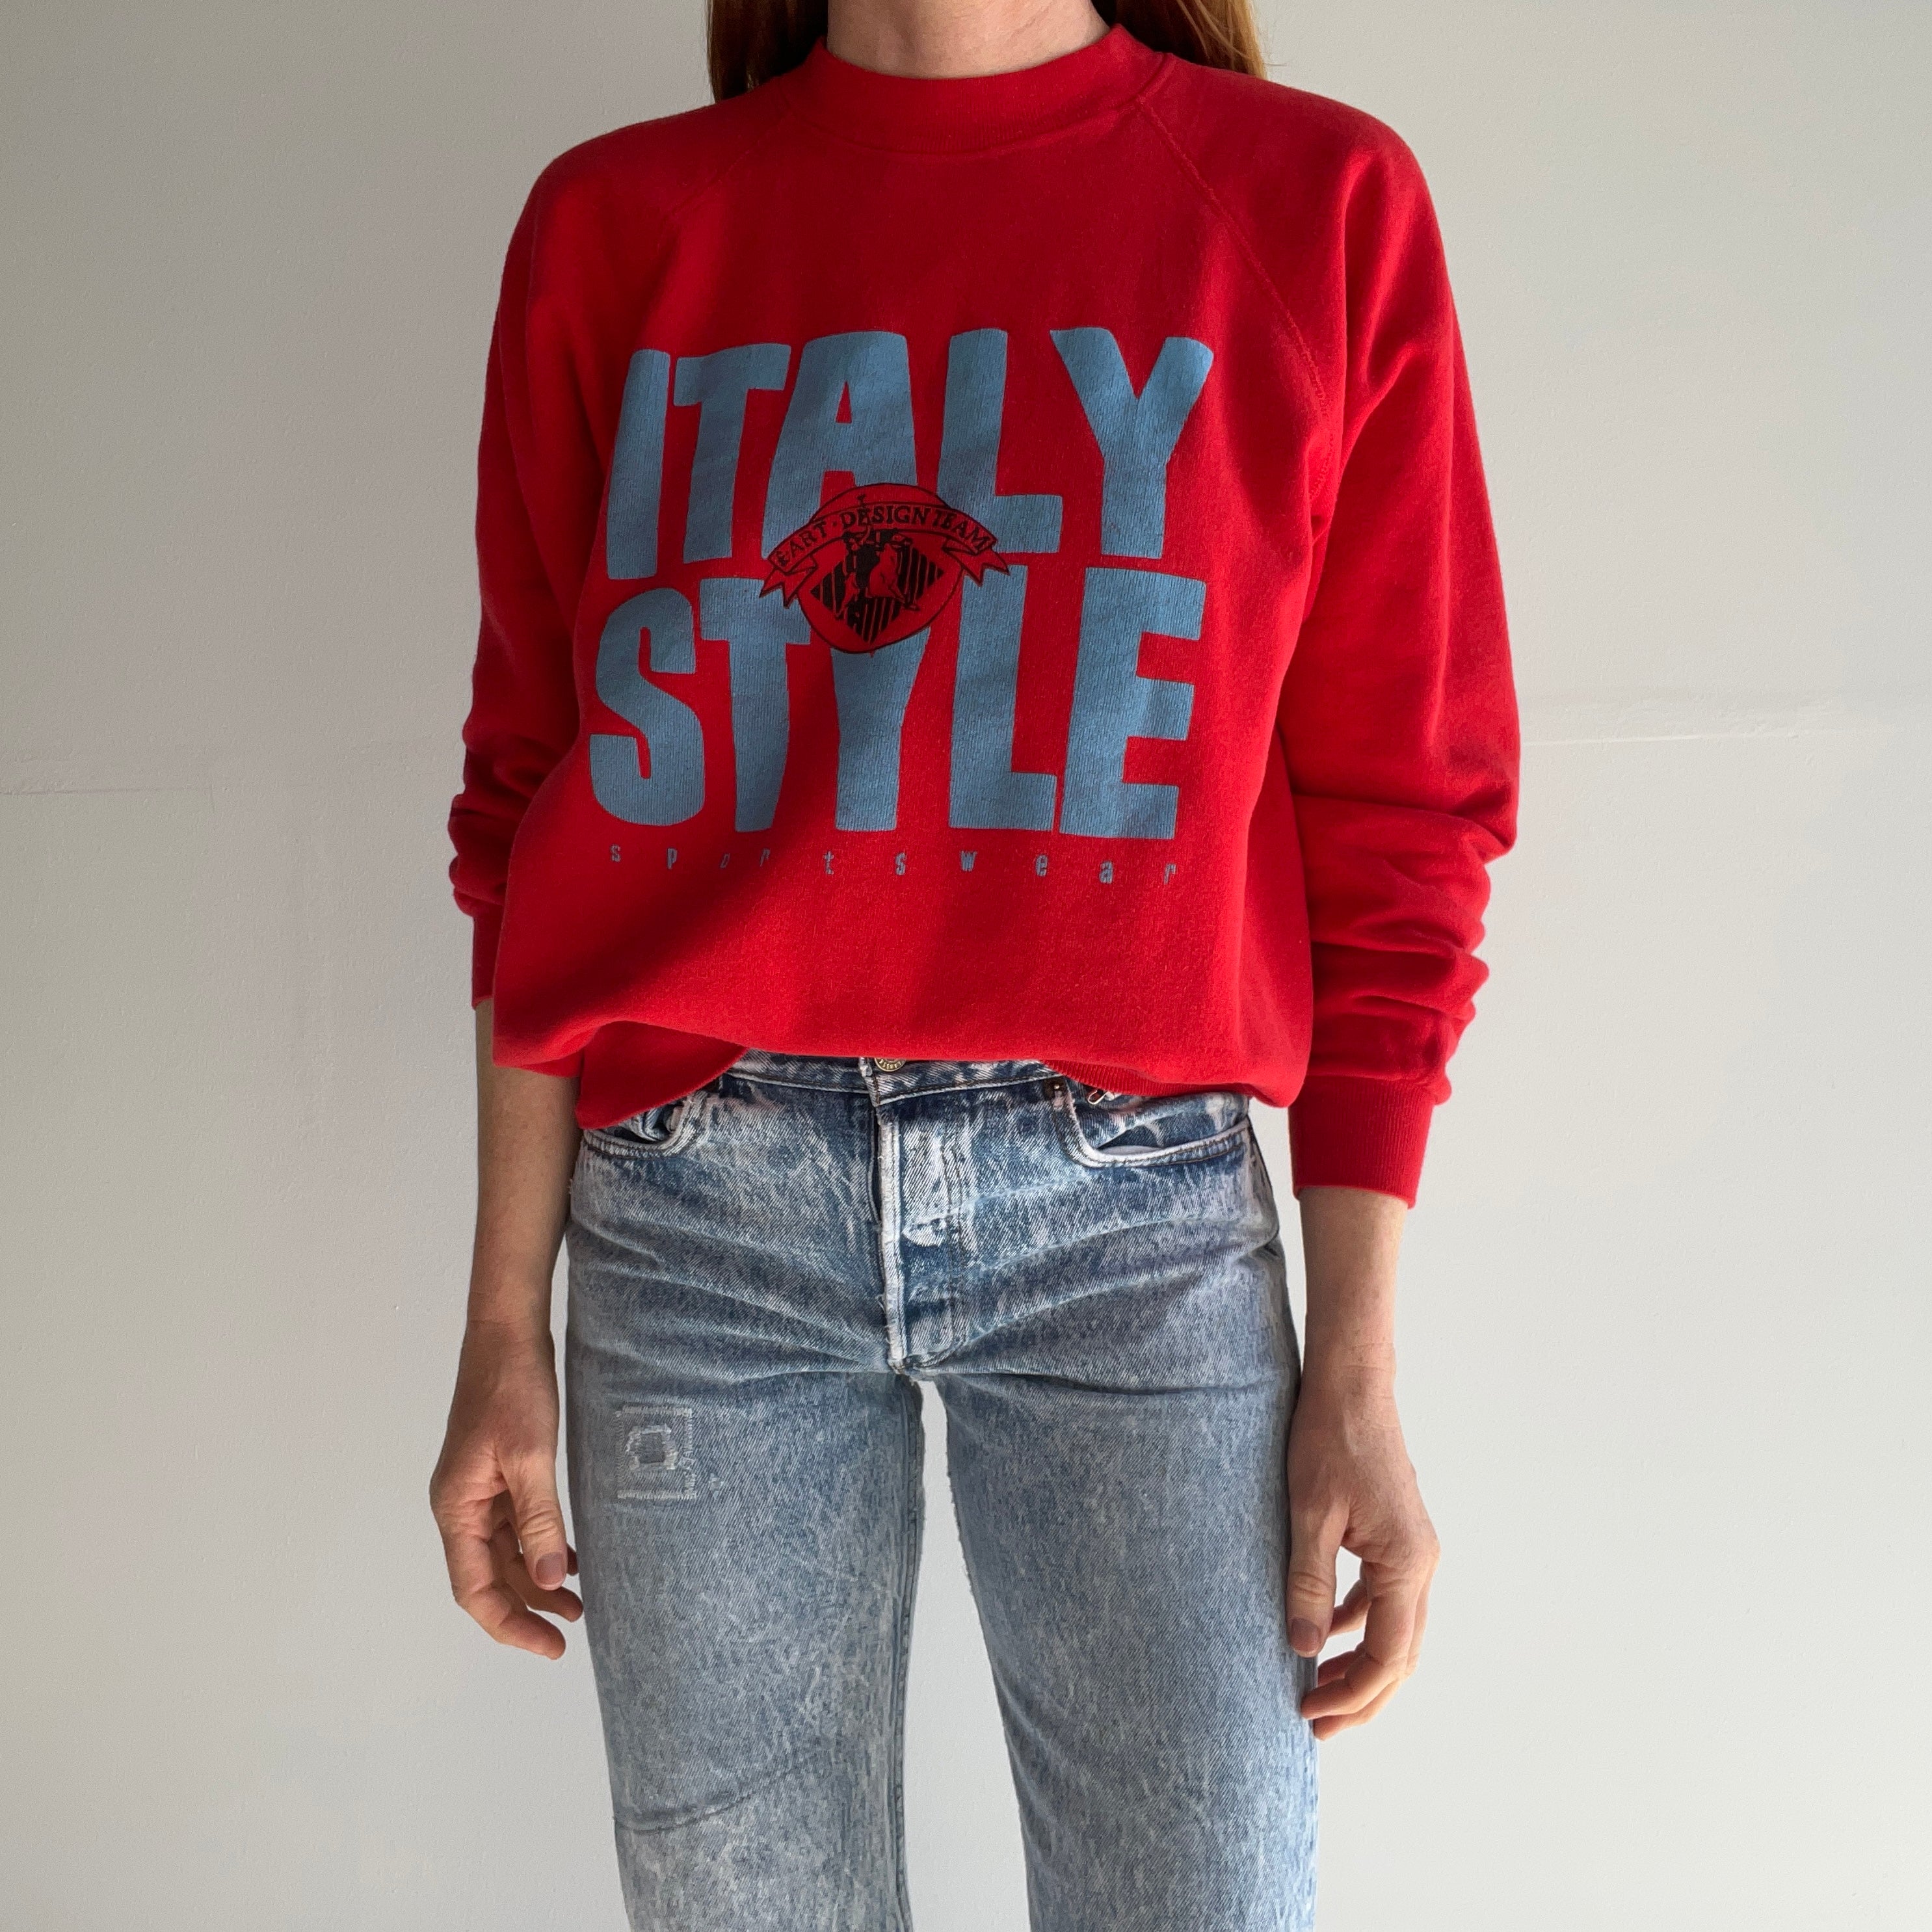 1980s Italy Style Sweatshirt - USA Made